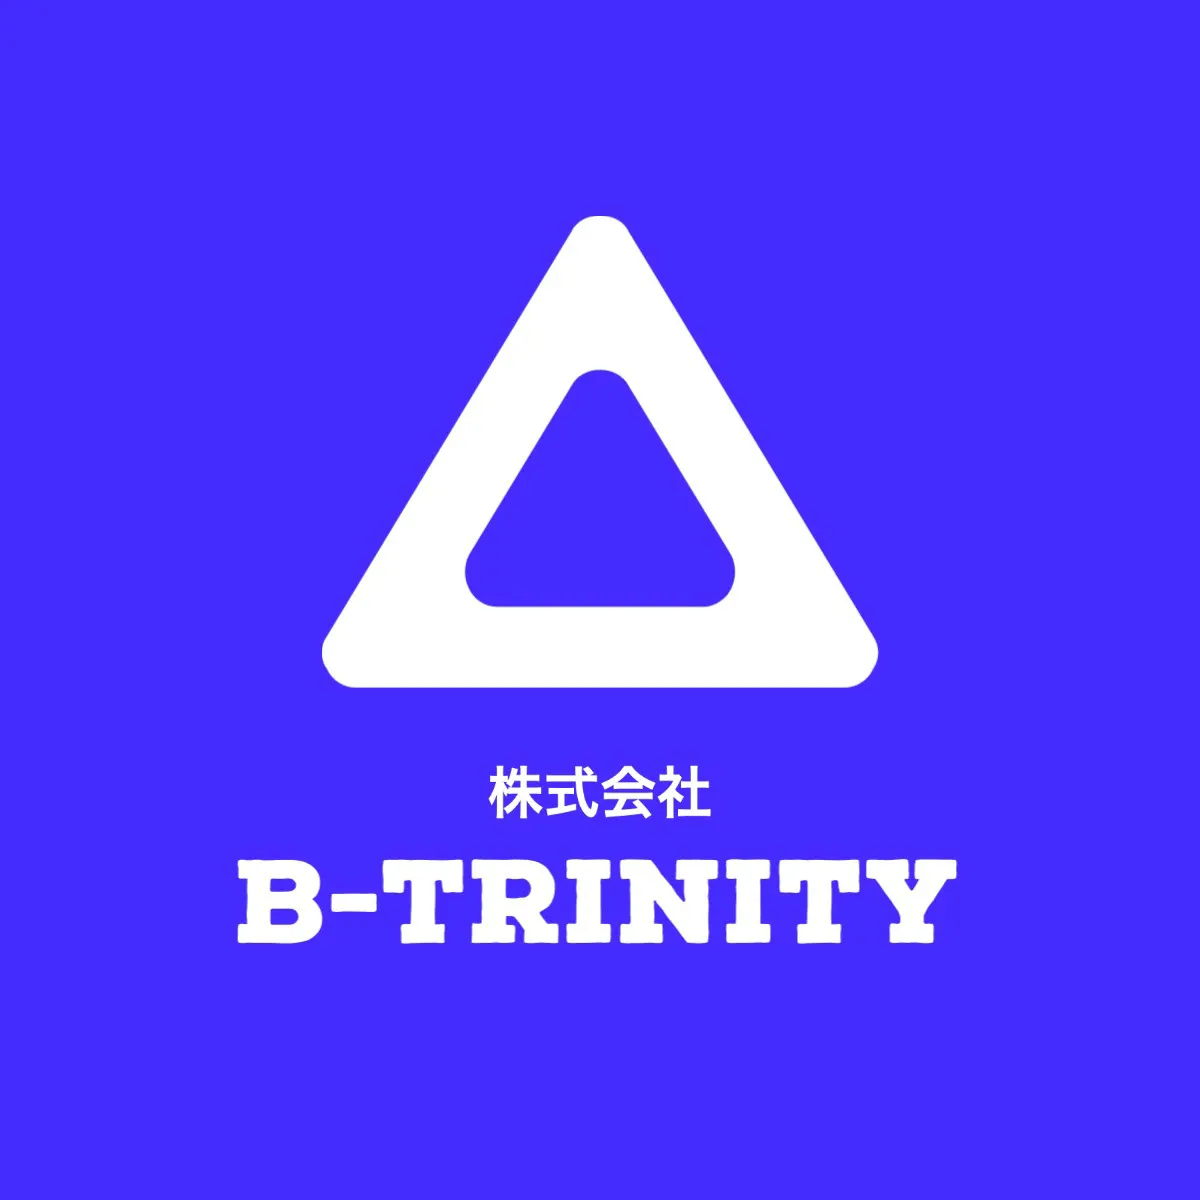 Blue triangle logo